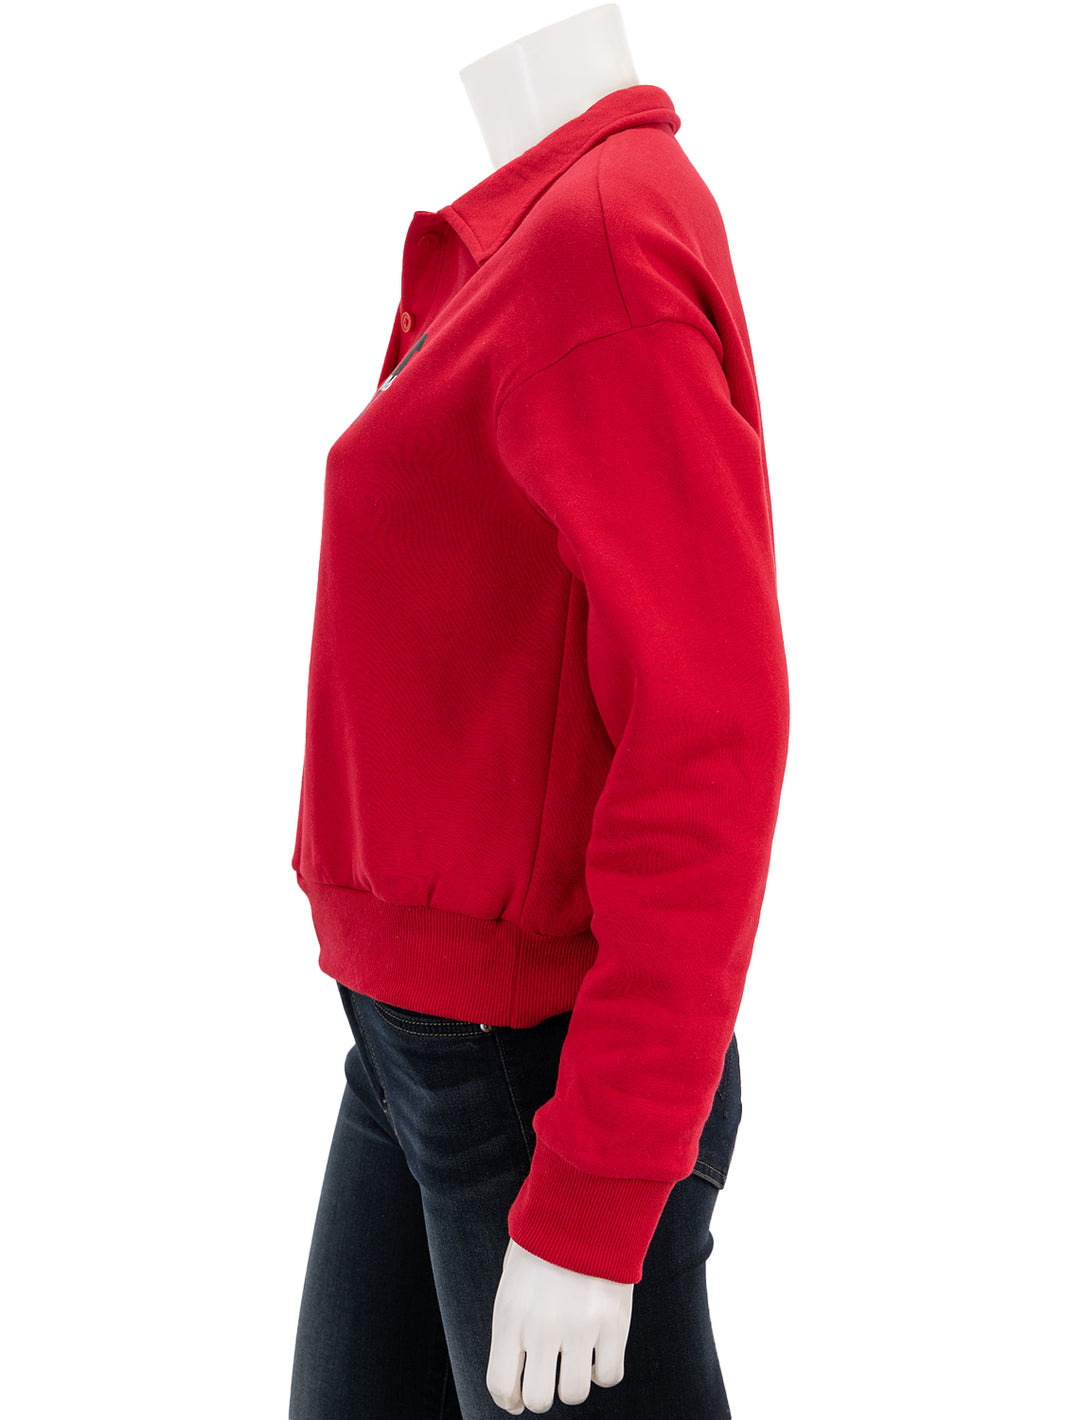 Side view of Recess Apparel's Fleece Polo Sweatshirt in Red.